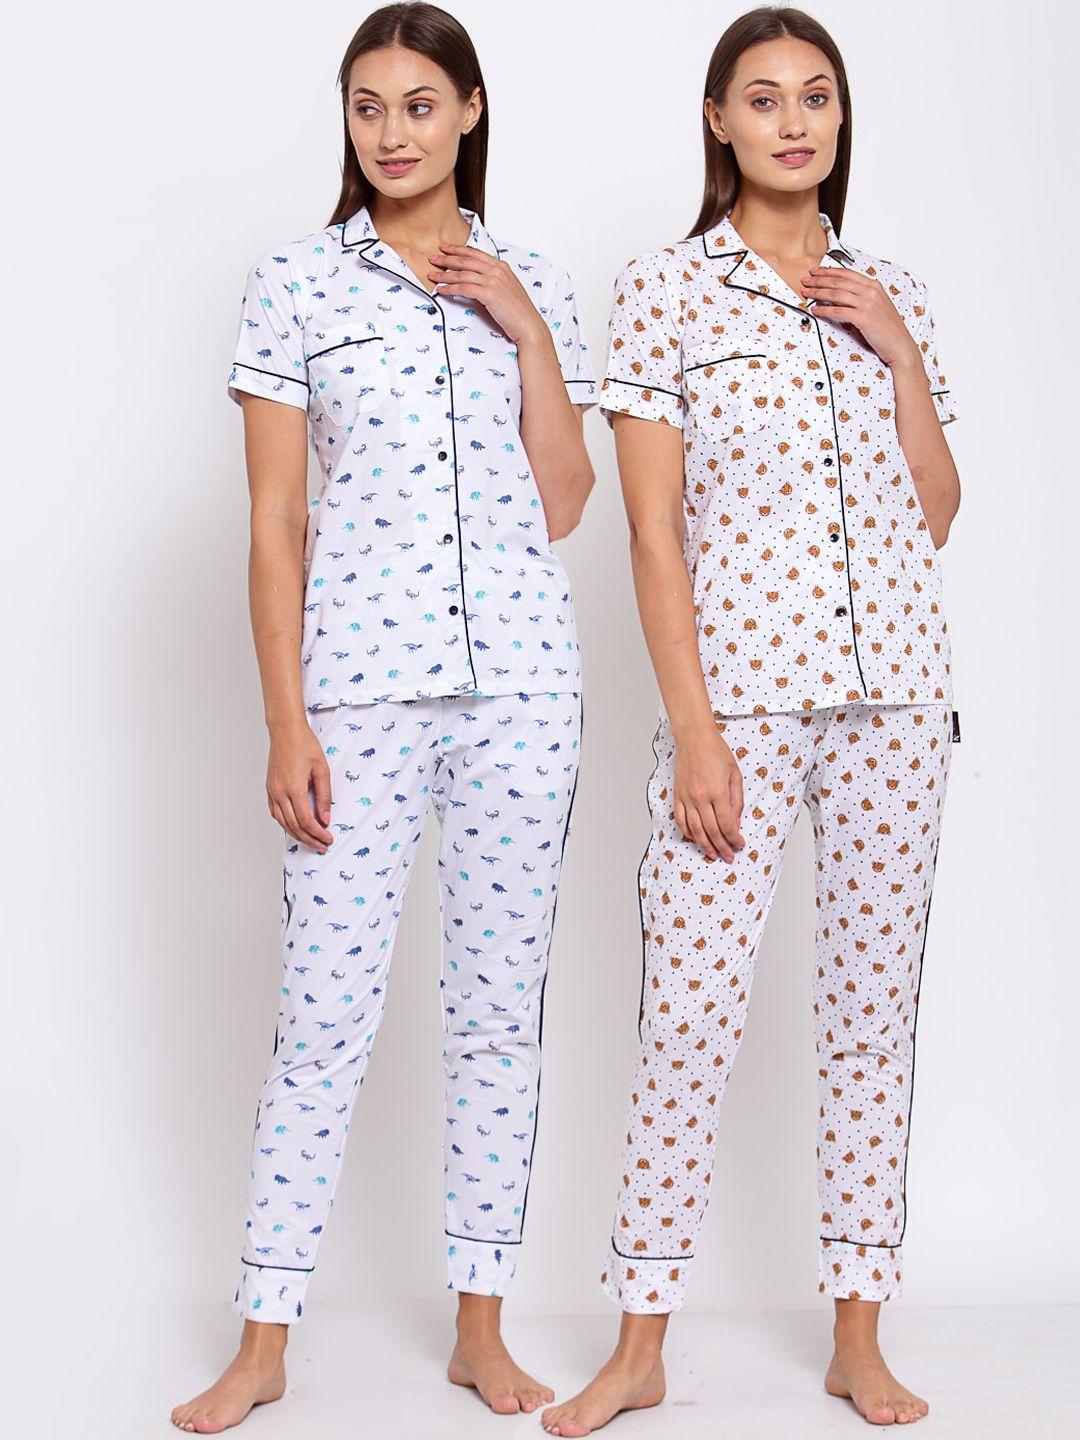 klotthe women pack-2 white & blue printed night suit